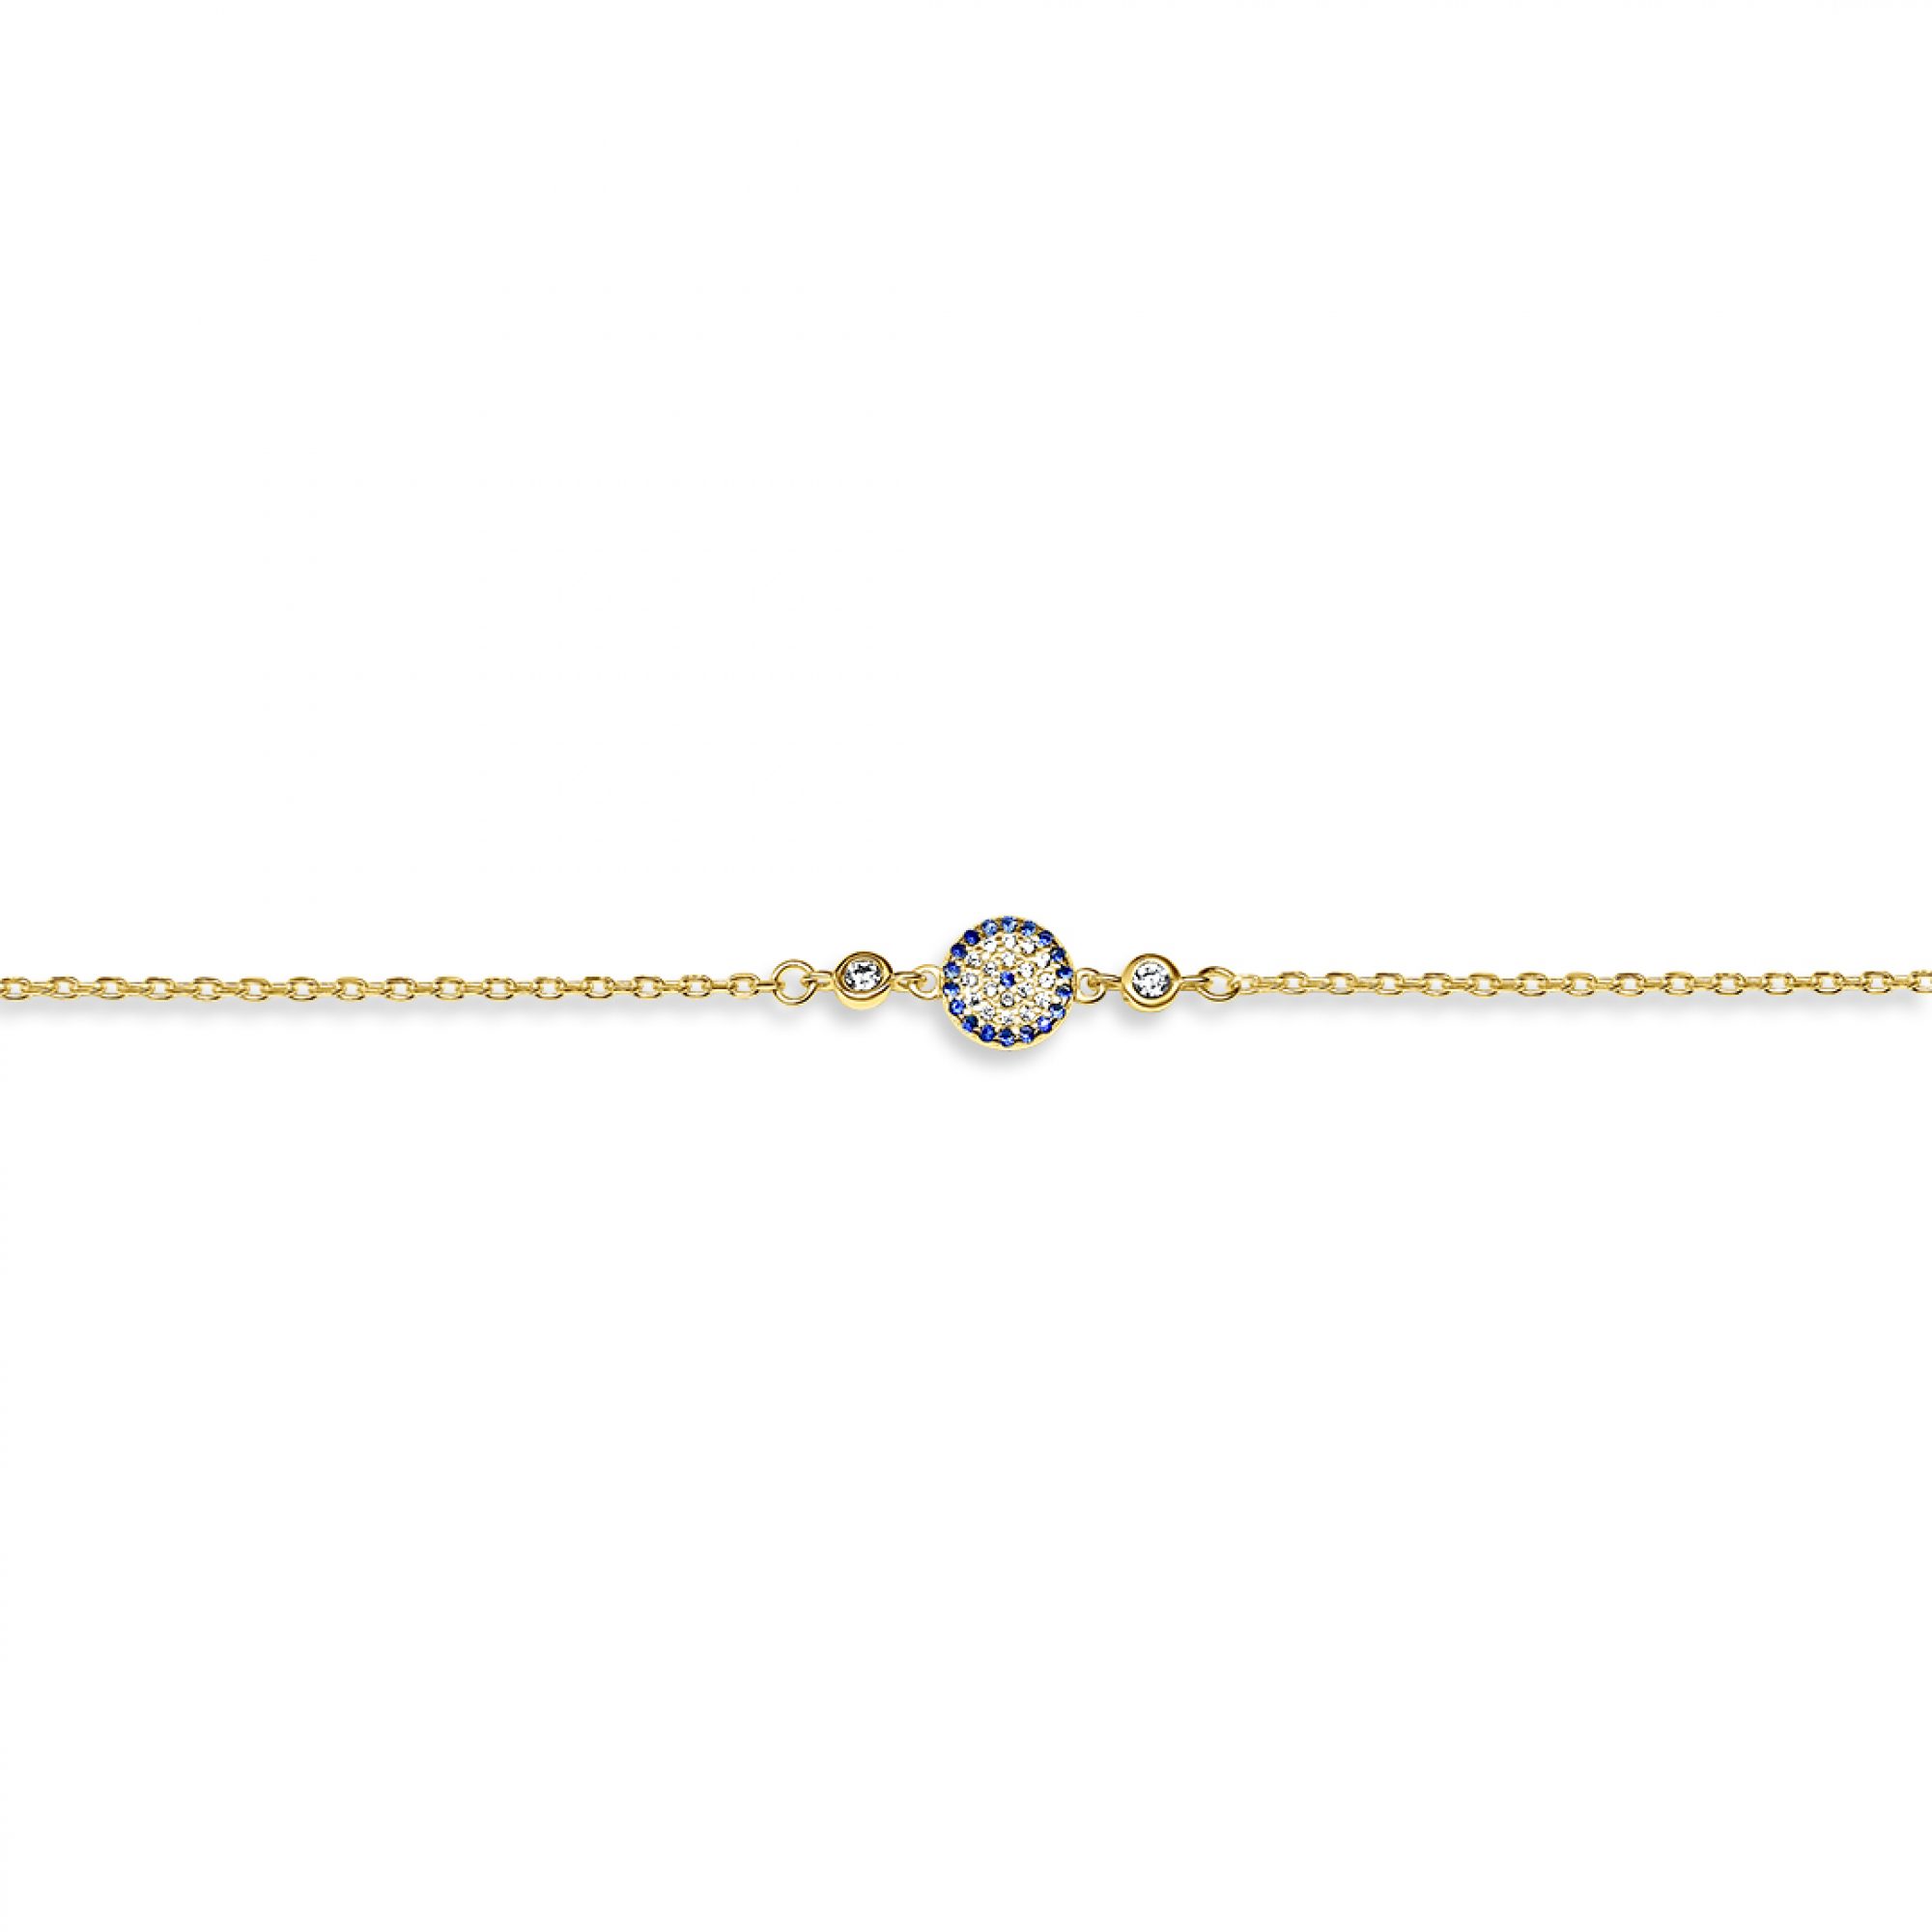 Gold plated eye bracelet with zircon stones